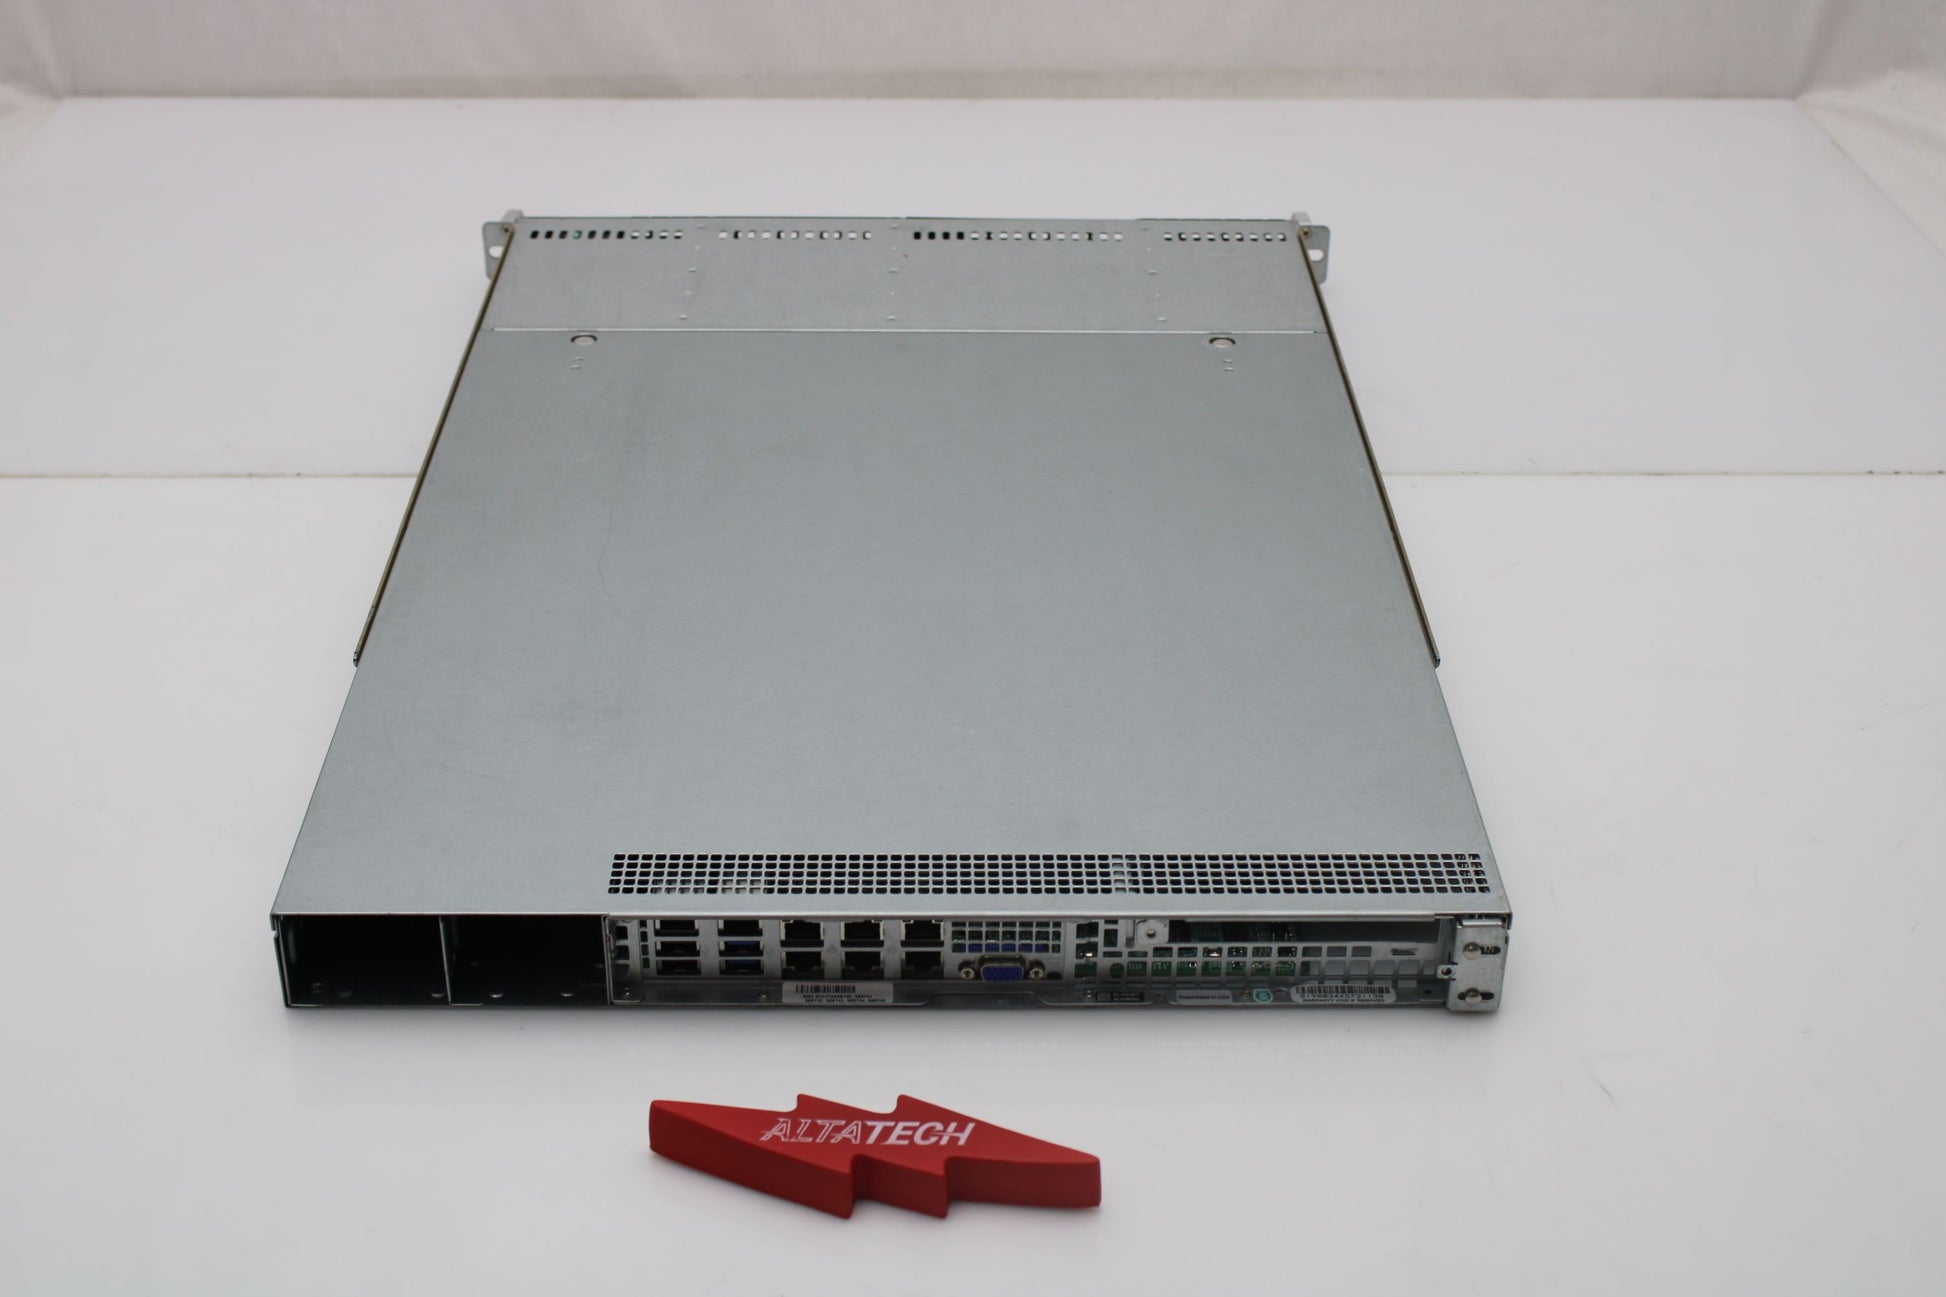 SuperMicro CSE-815 CTO 1U 4x 3.5" Server, Used